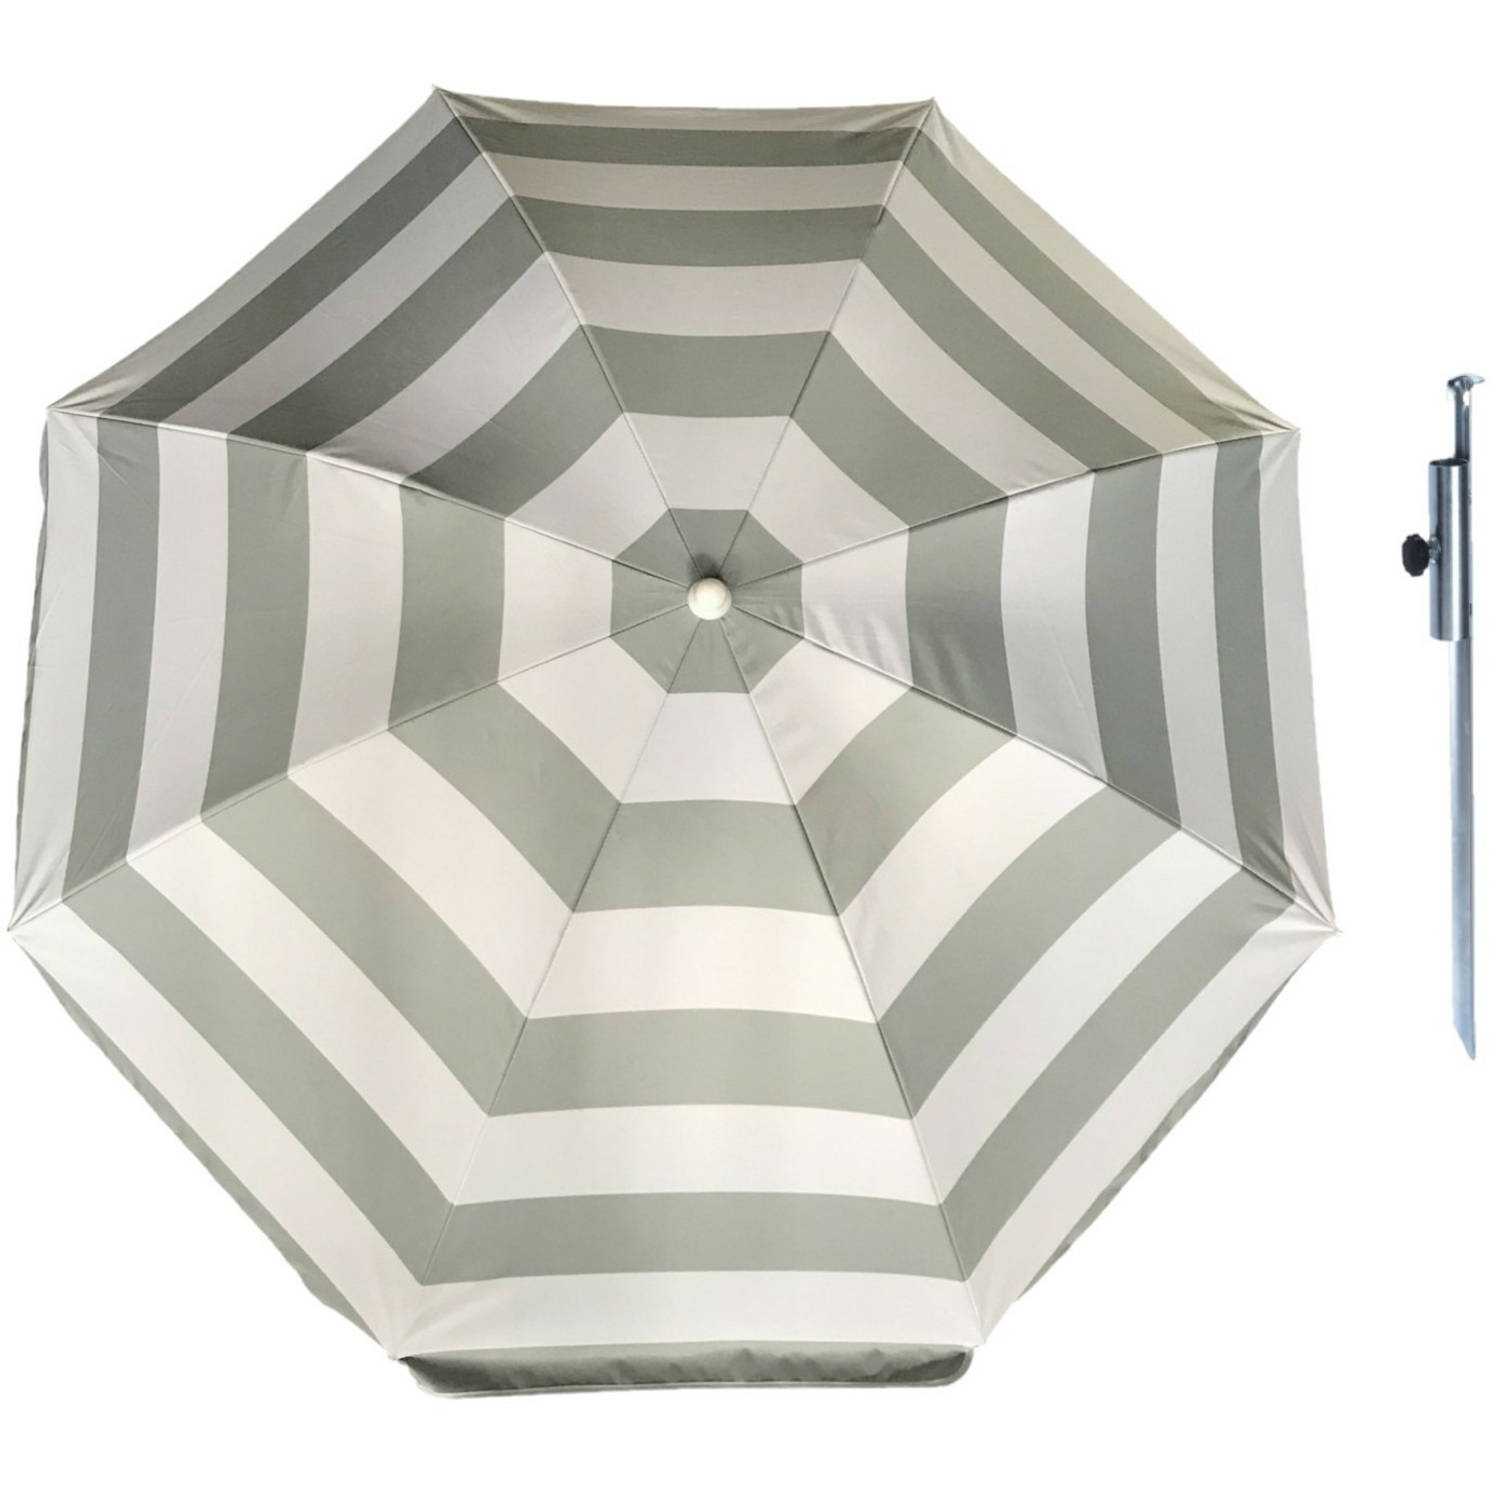 Parasol Zilver-wit D120 cm incl. draagtas parasolharing 49 cm Parasols